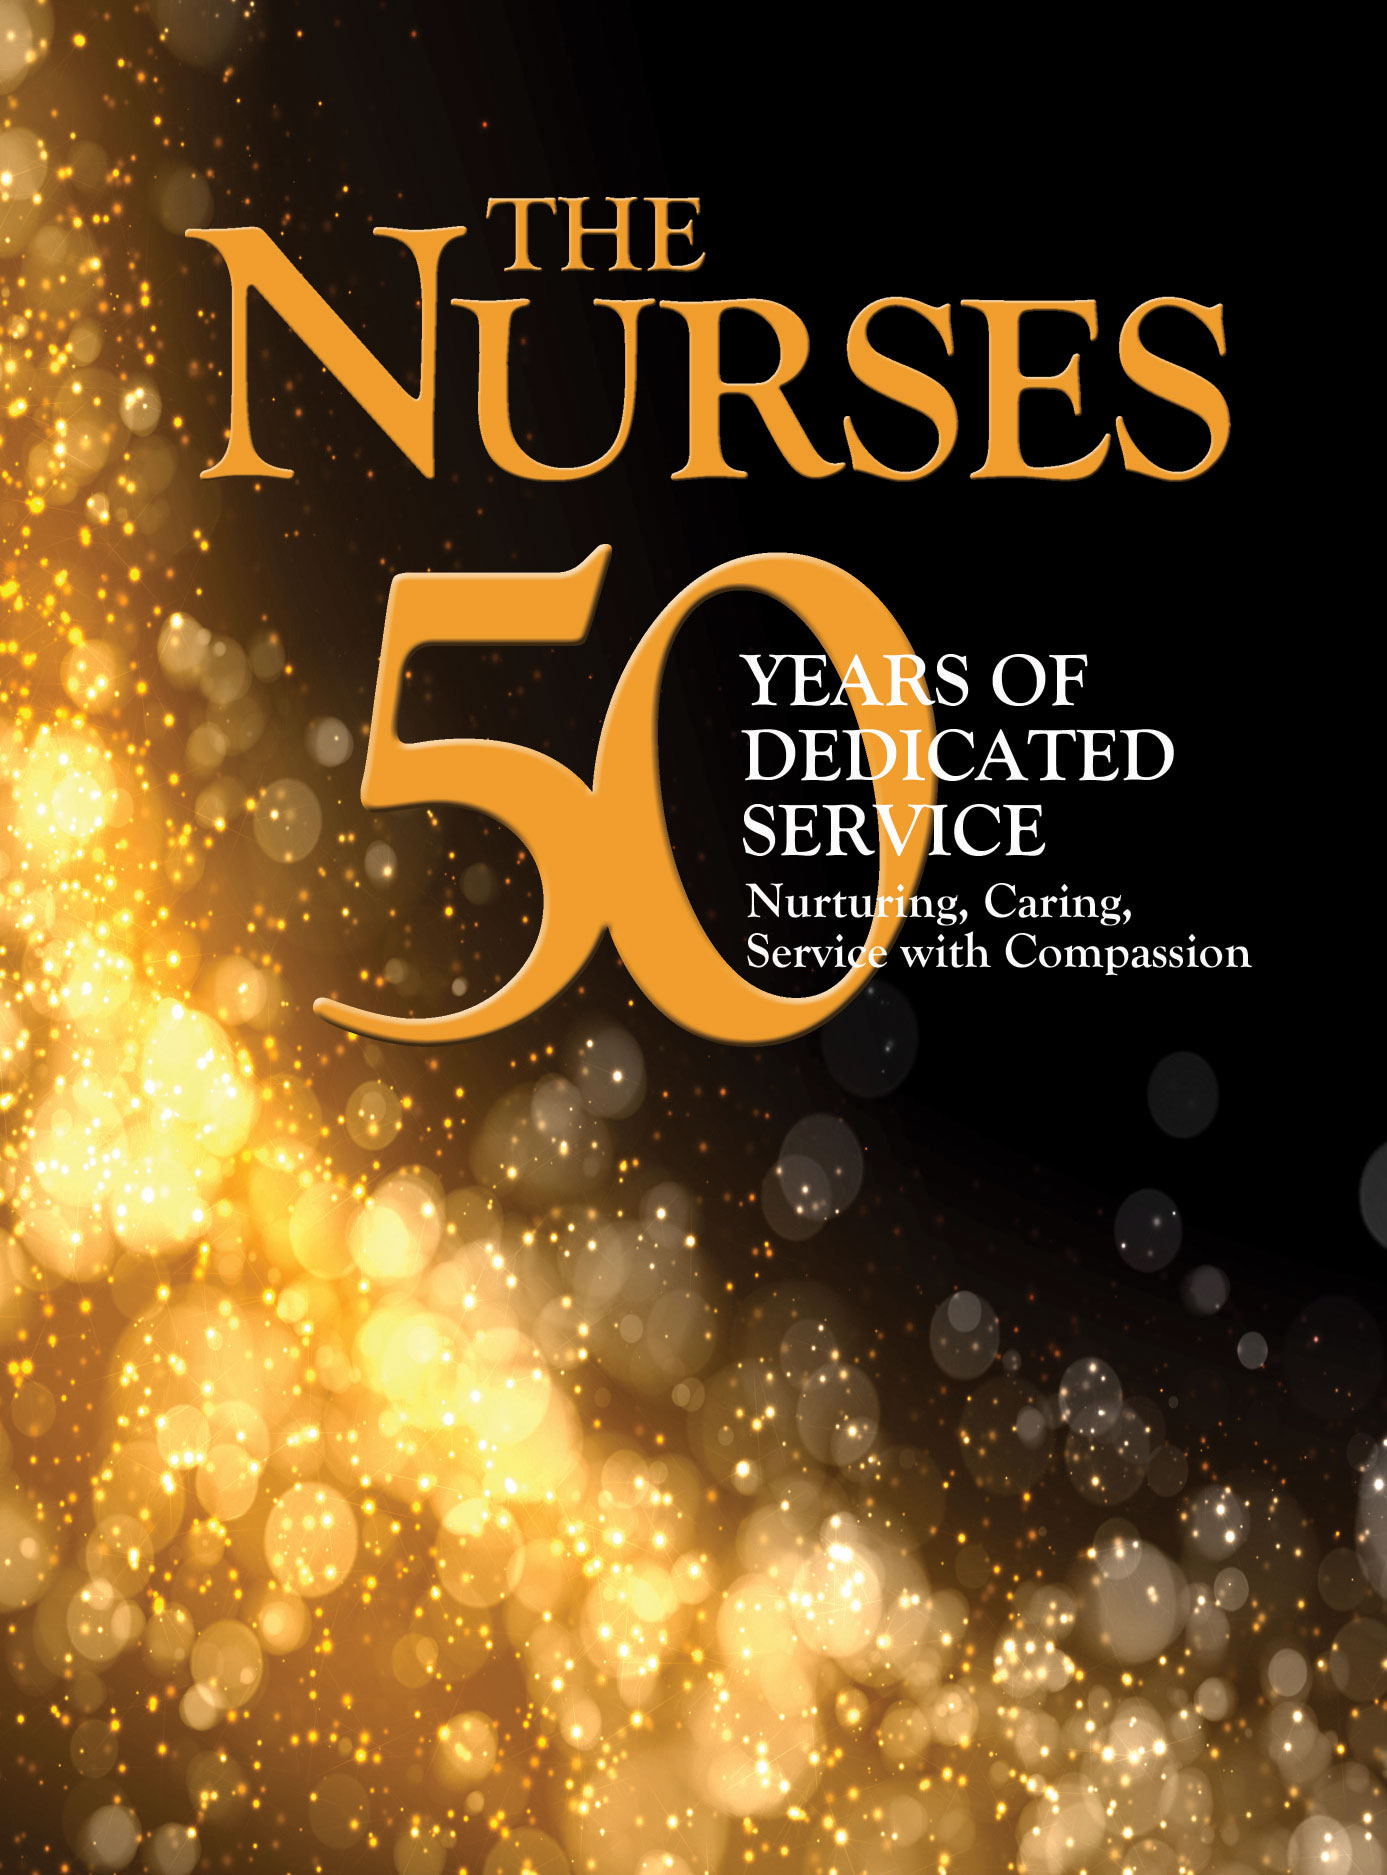 The Nurses book cover